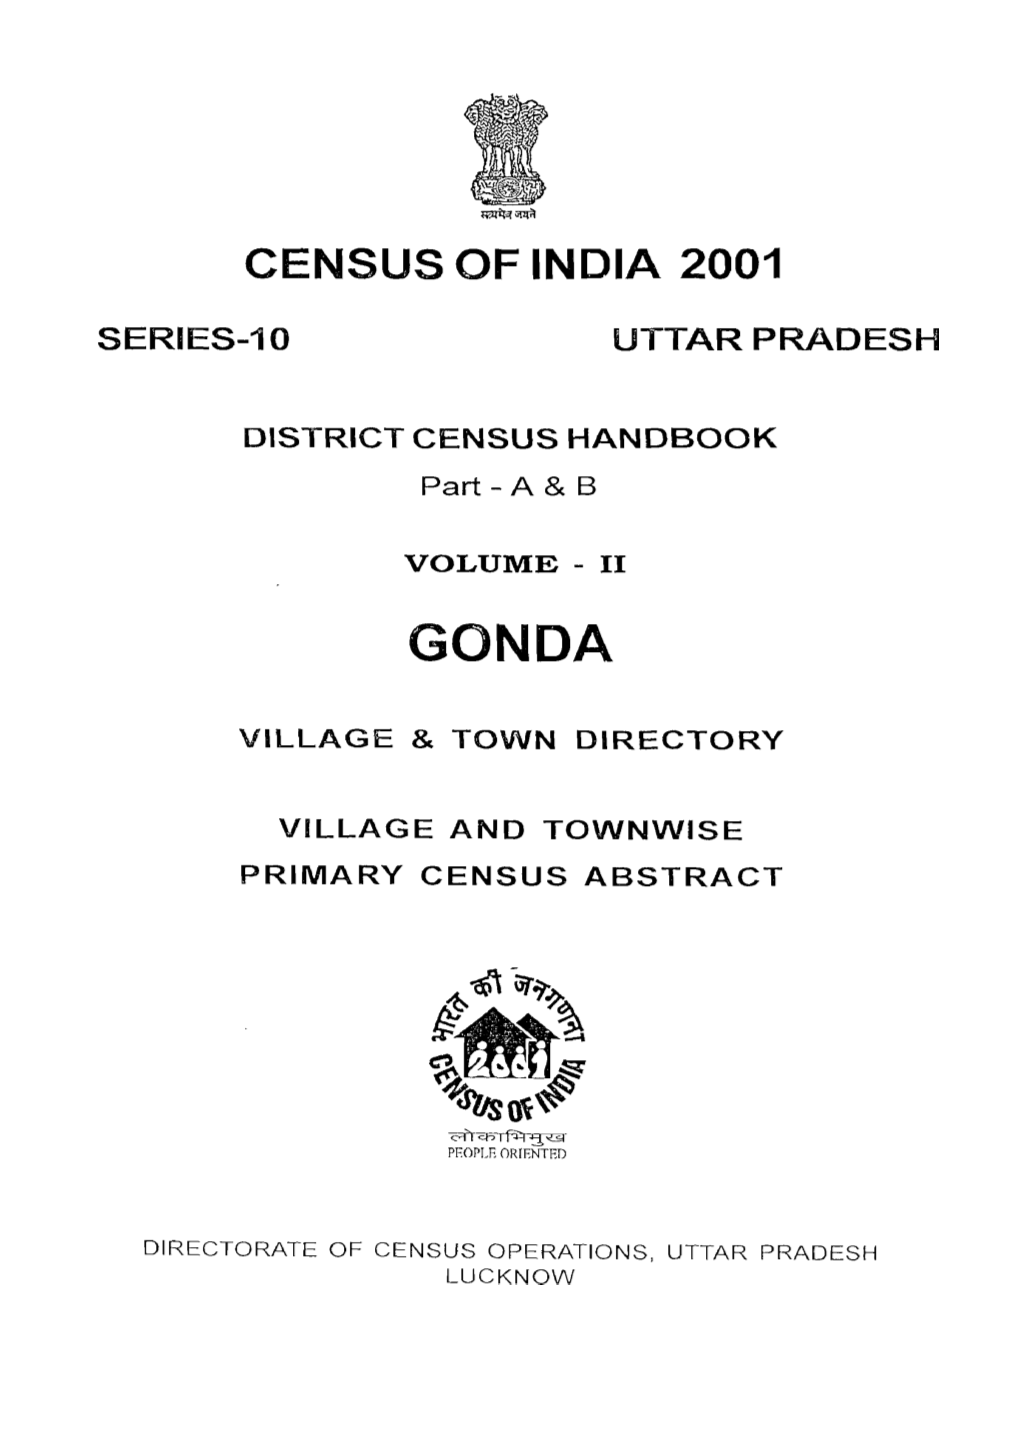 District Census Handbook, Gonda, Part XII-A & B, Vol-II, Series-10